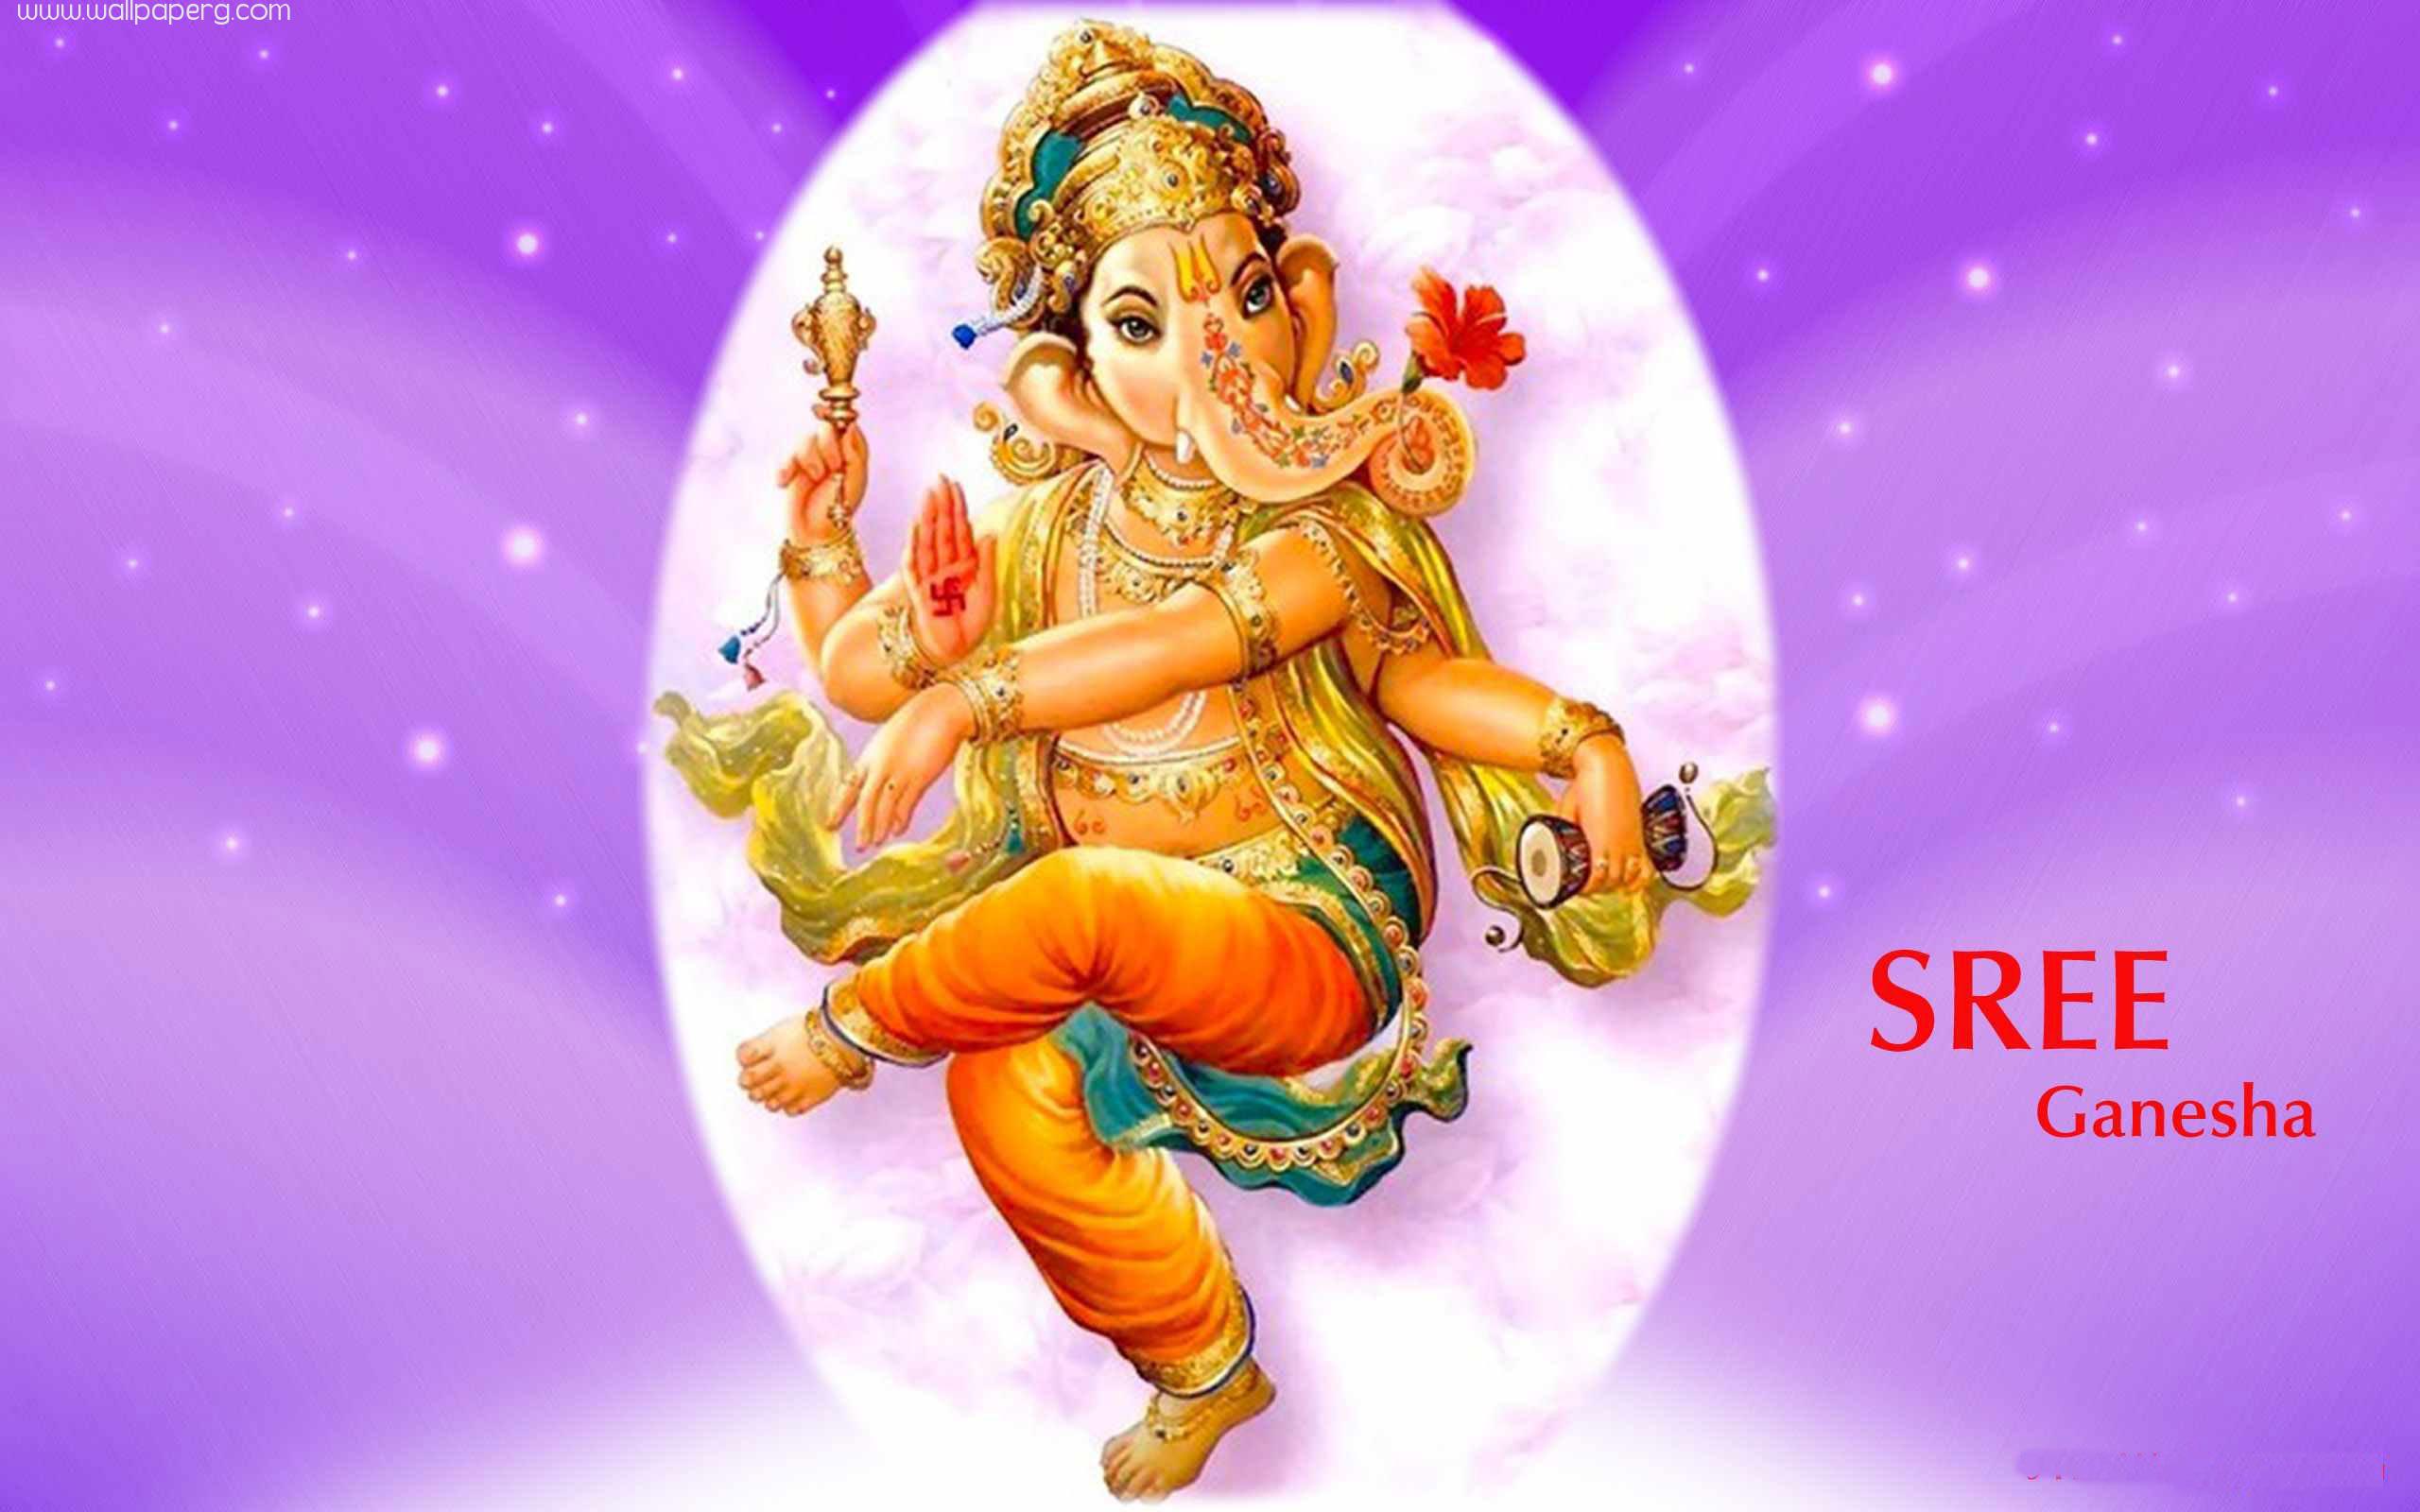 Download Shree ganesha ji - Ganesh chaturthi images- For Mobile Phone